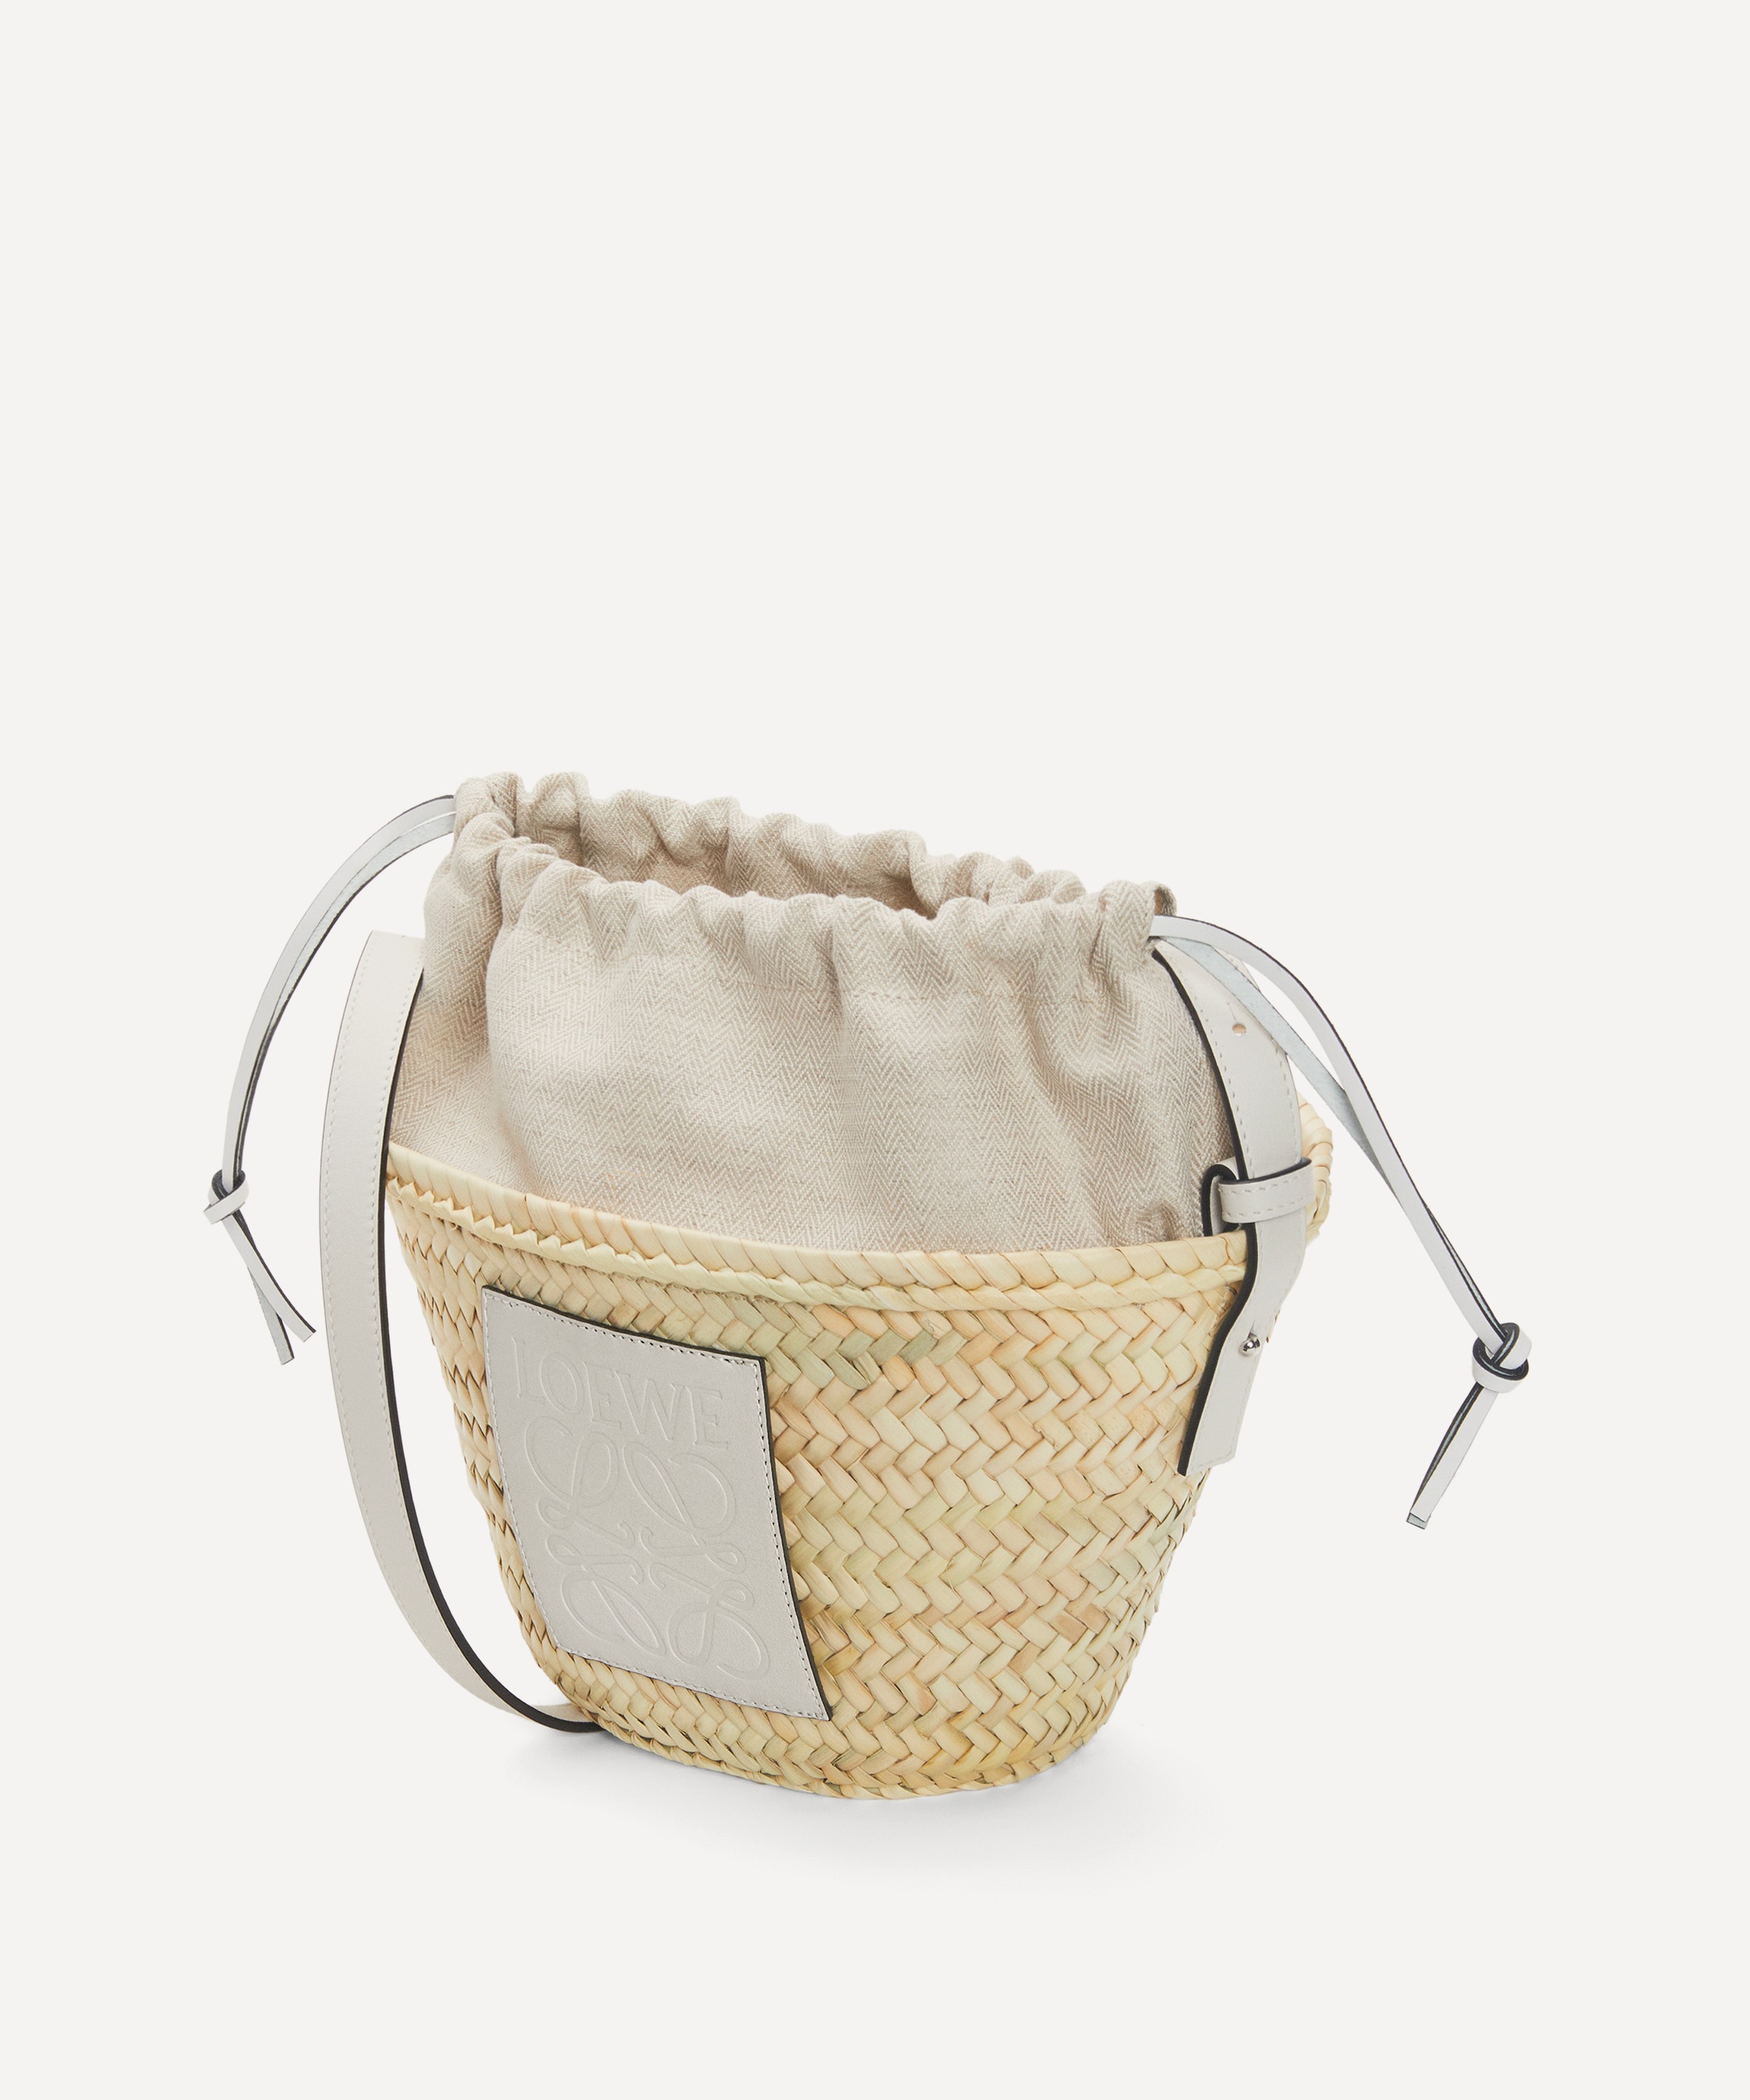 Loewe x Paula's Ibiza Drawstring Bucket Bag